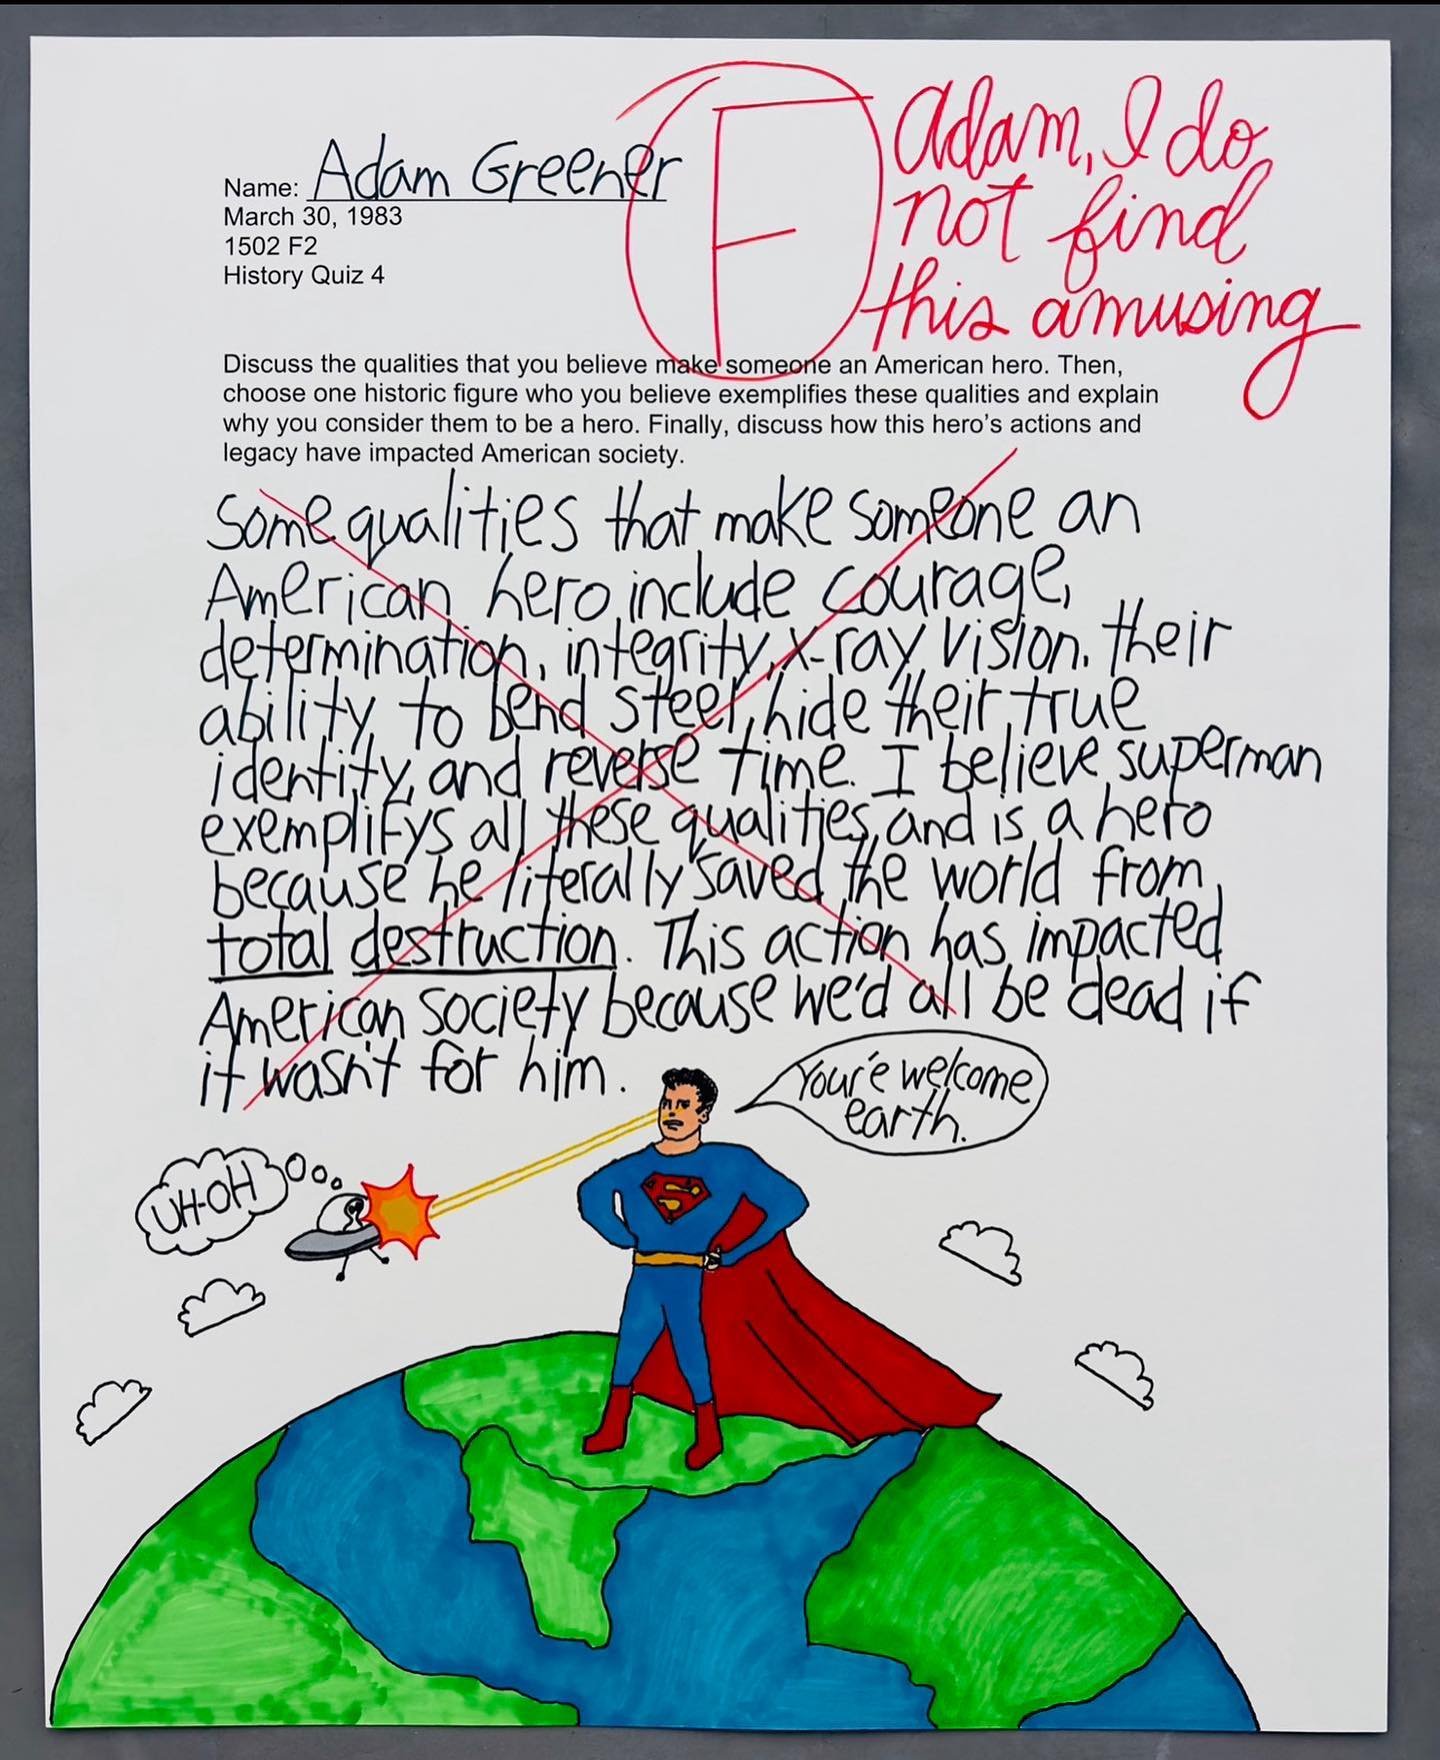 &ldquo;American Hero&rdquo; 24x30 inches, Posca paint and Copic on paper #superman #art #adamgreener #popart #popquiz #middleschool